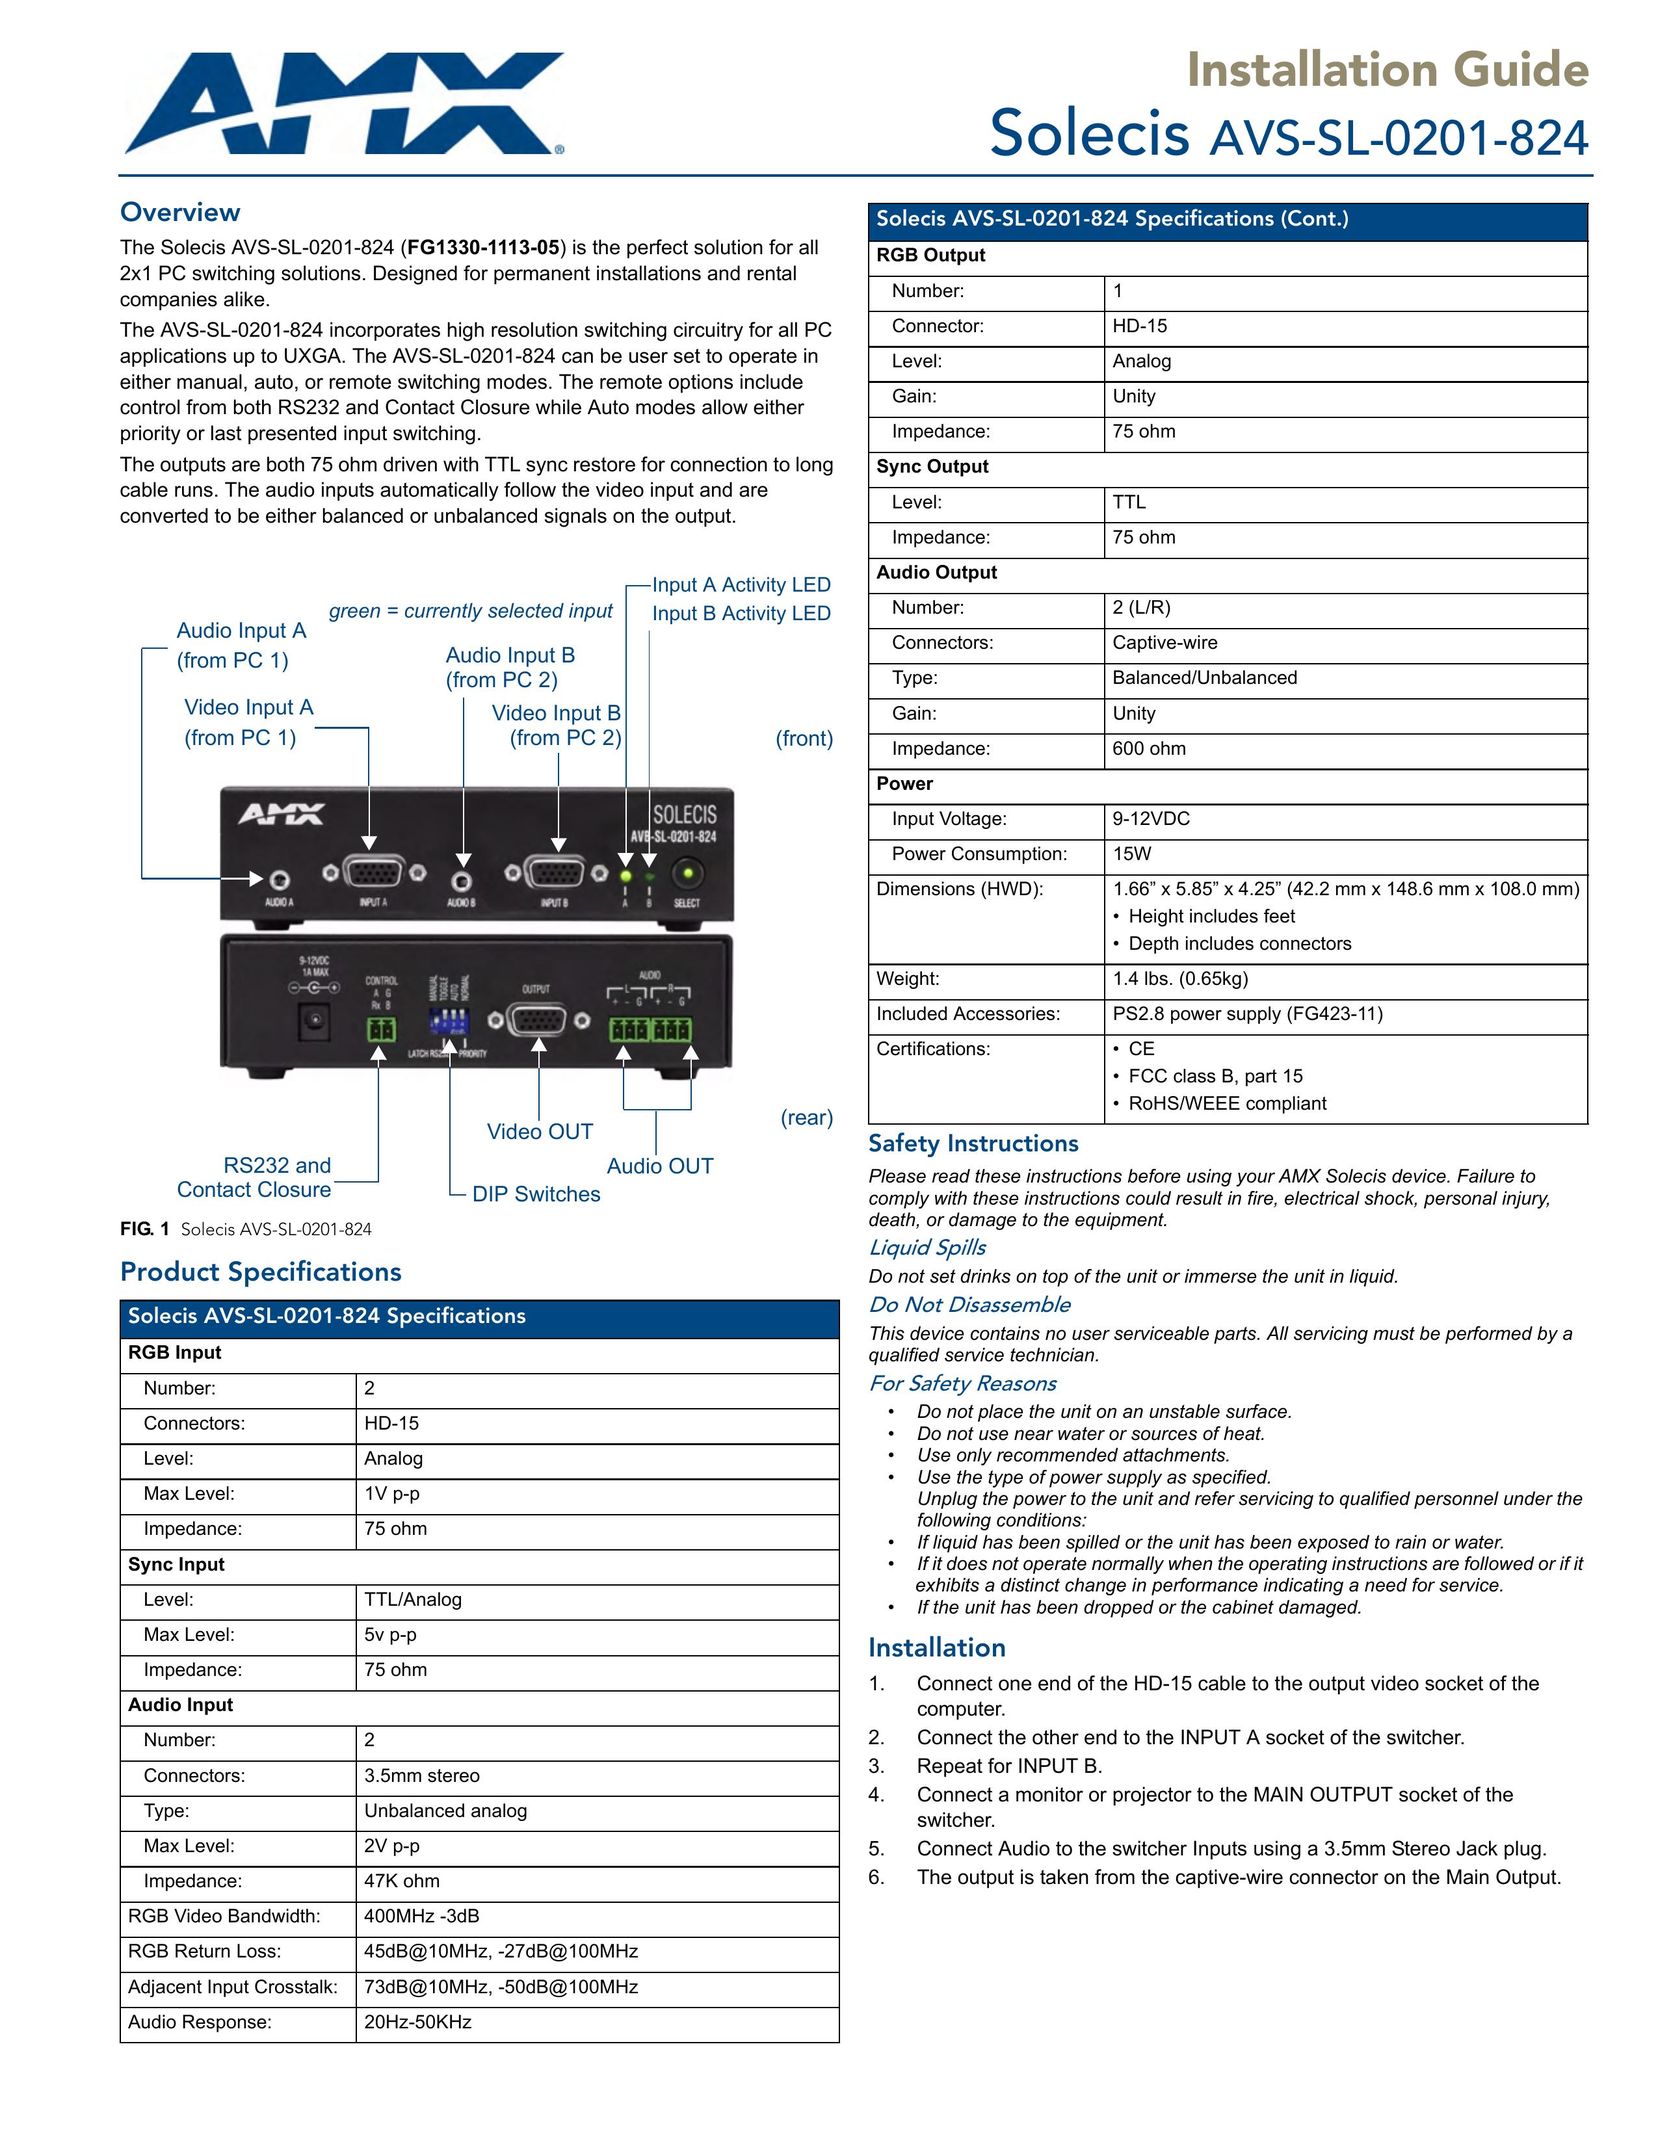 AMX AVS-SL-0201-824 Switch User Manual